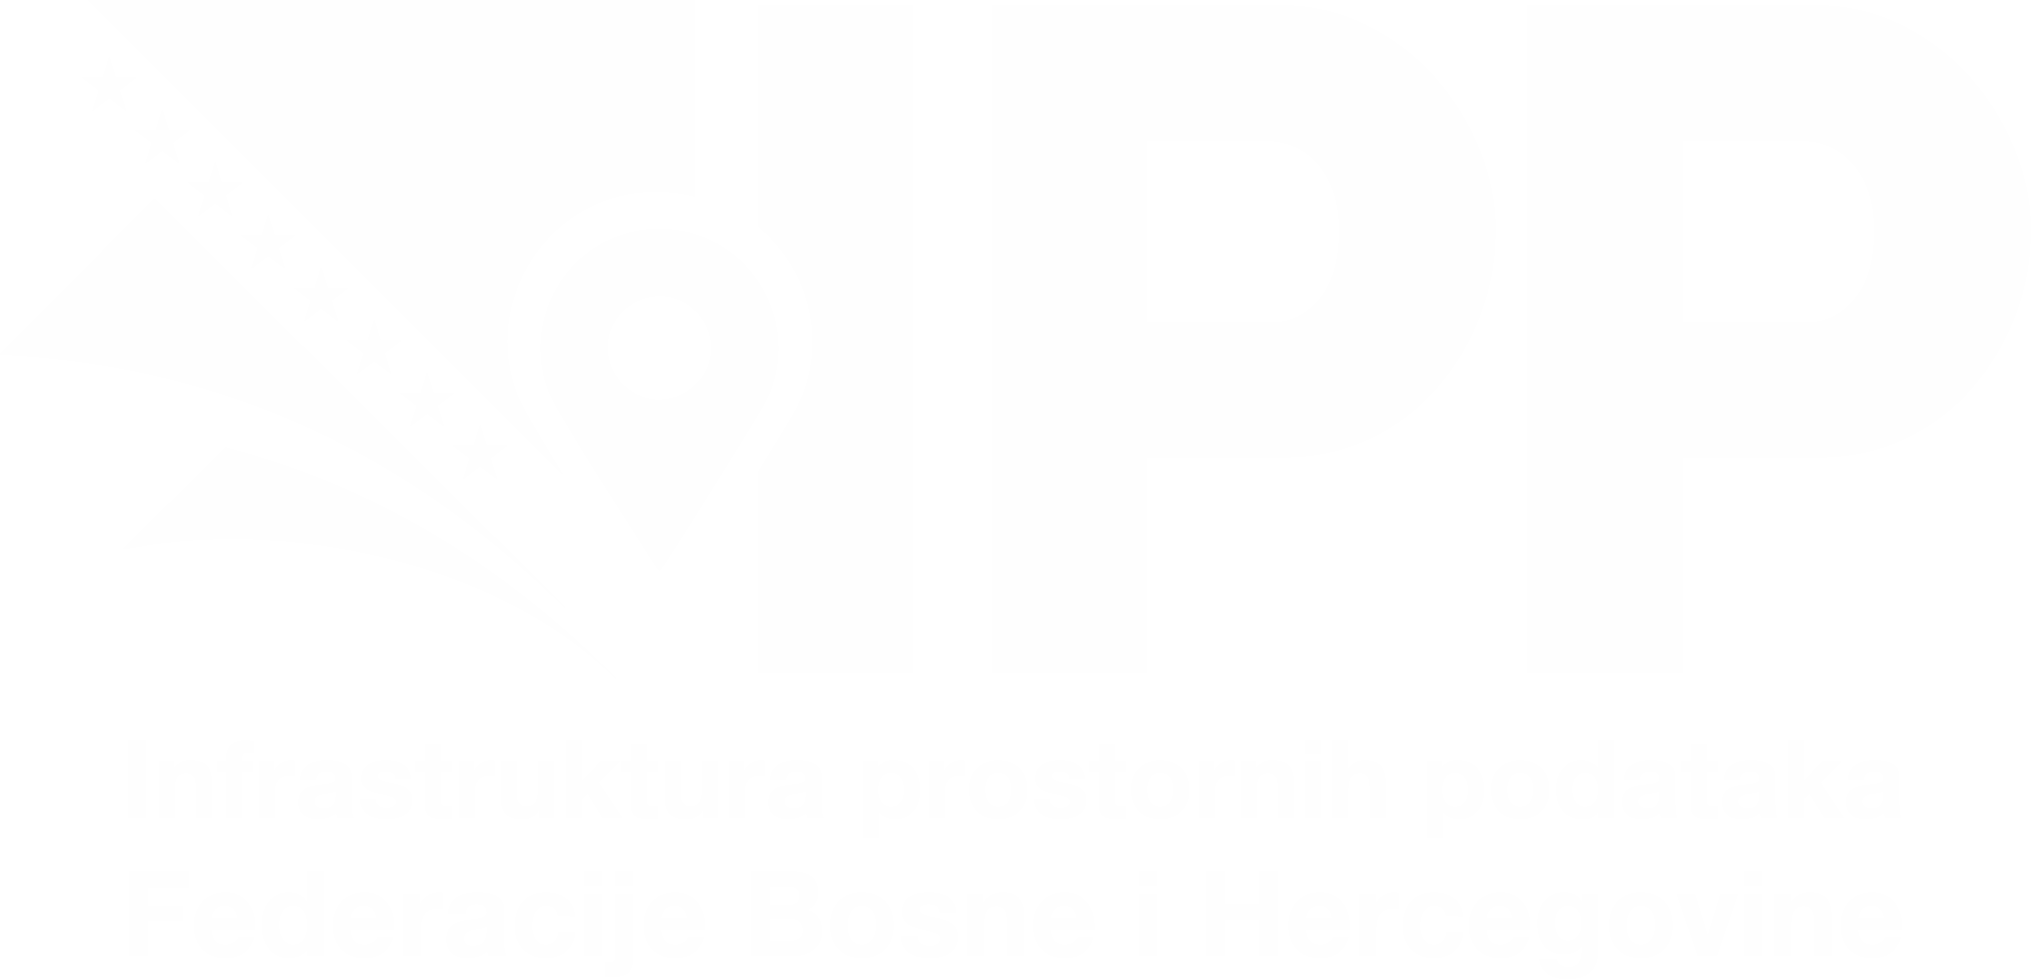 IPP Logo